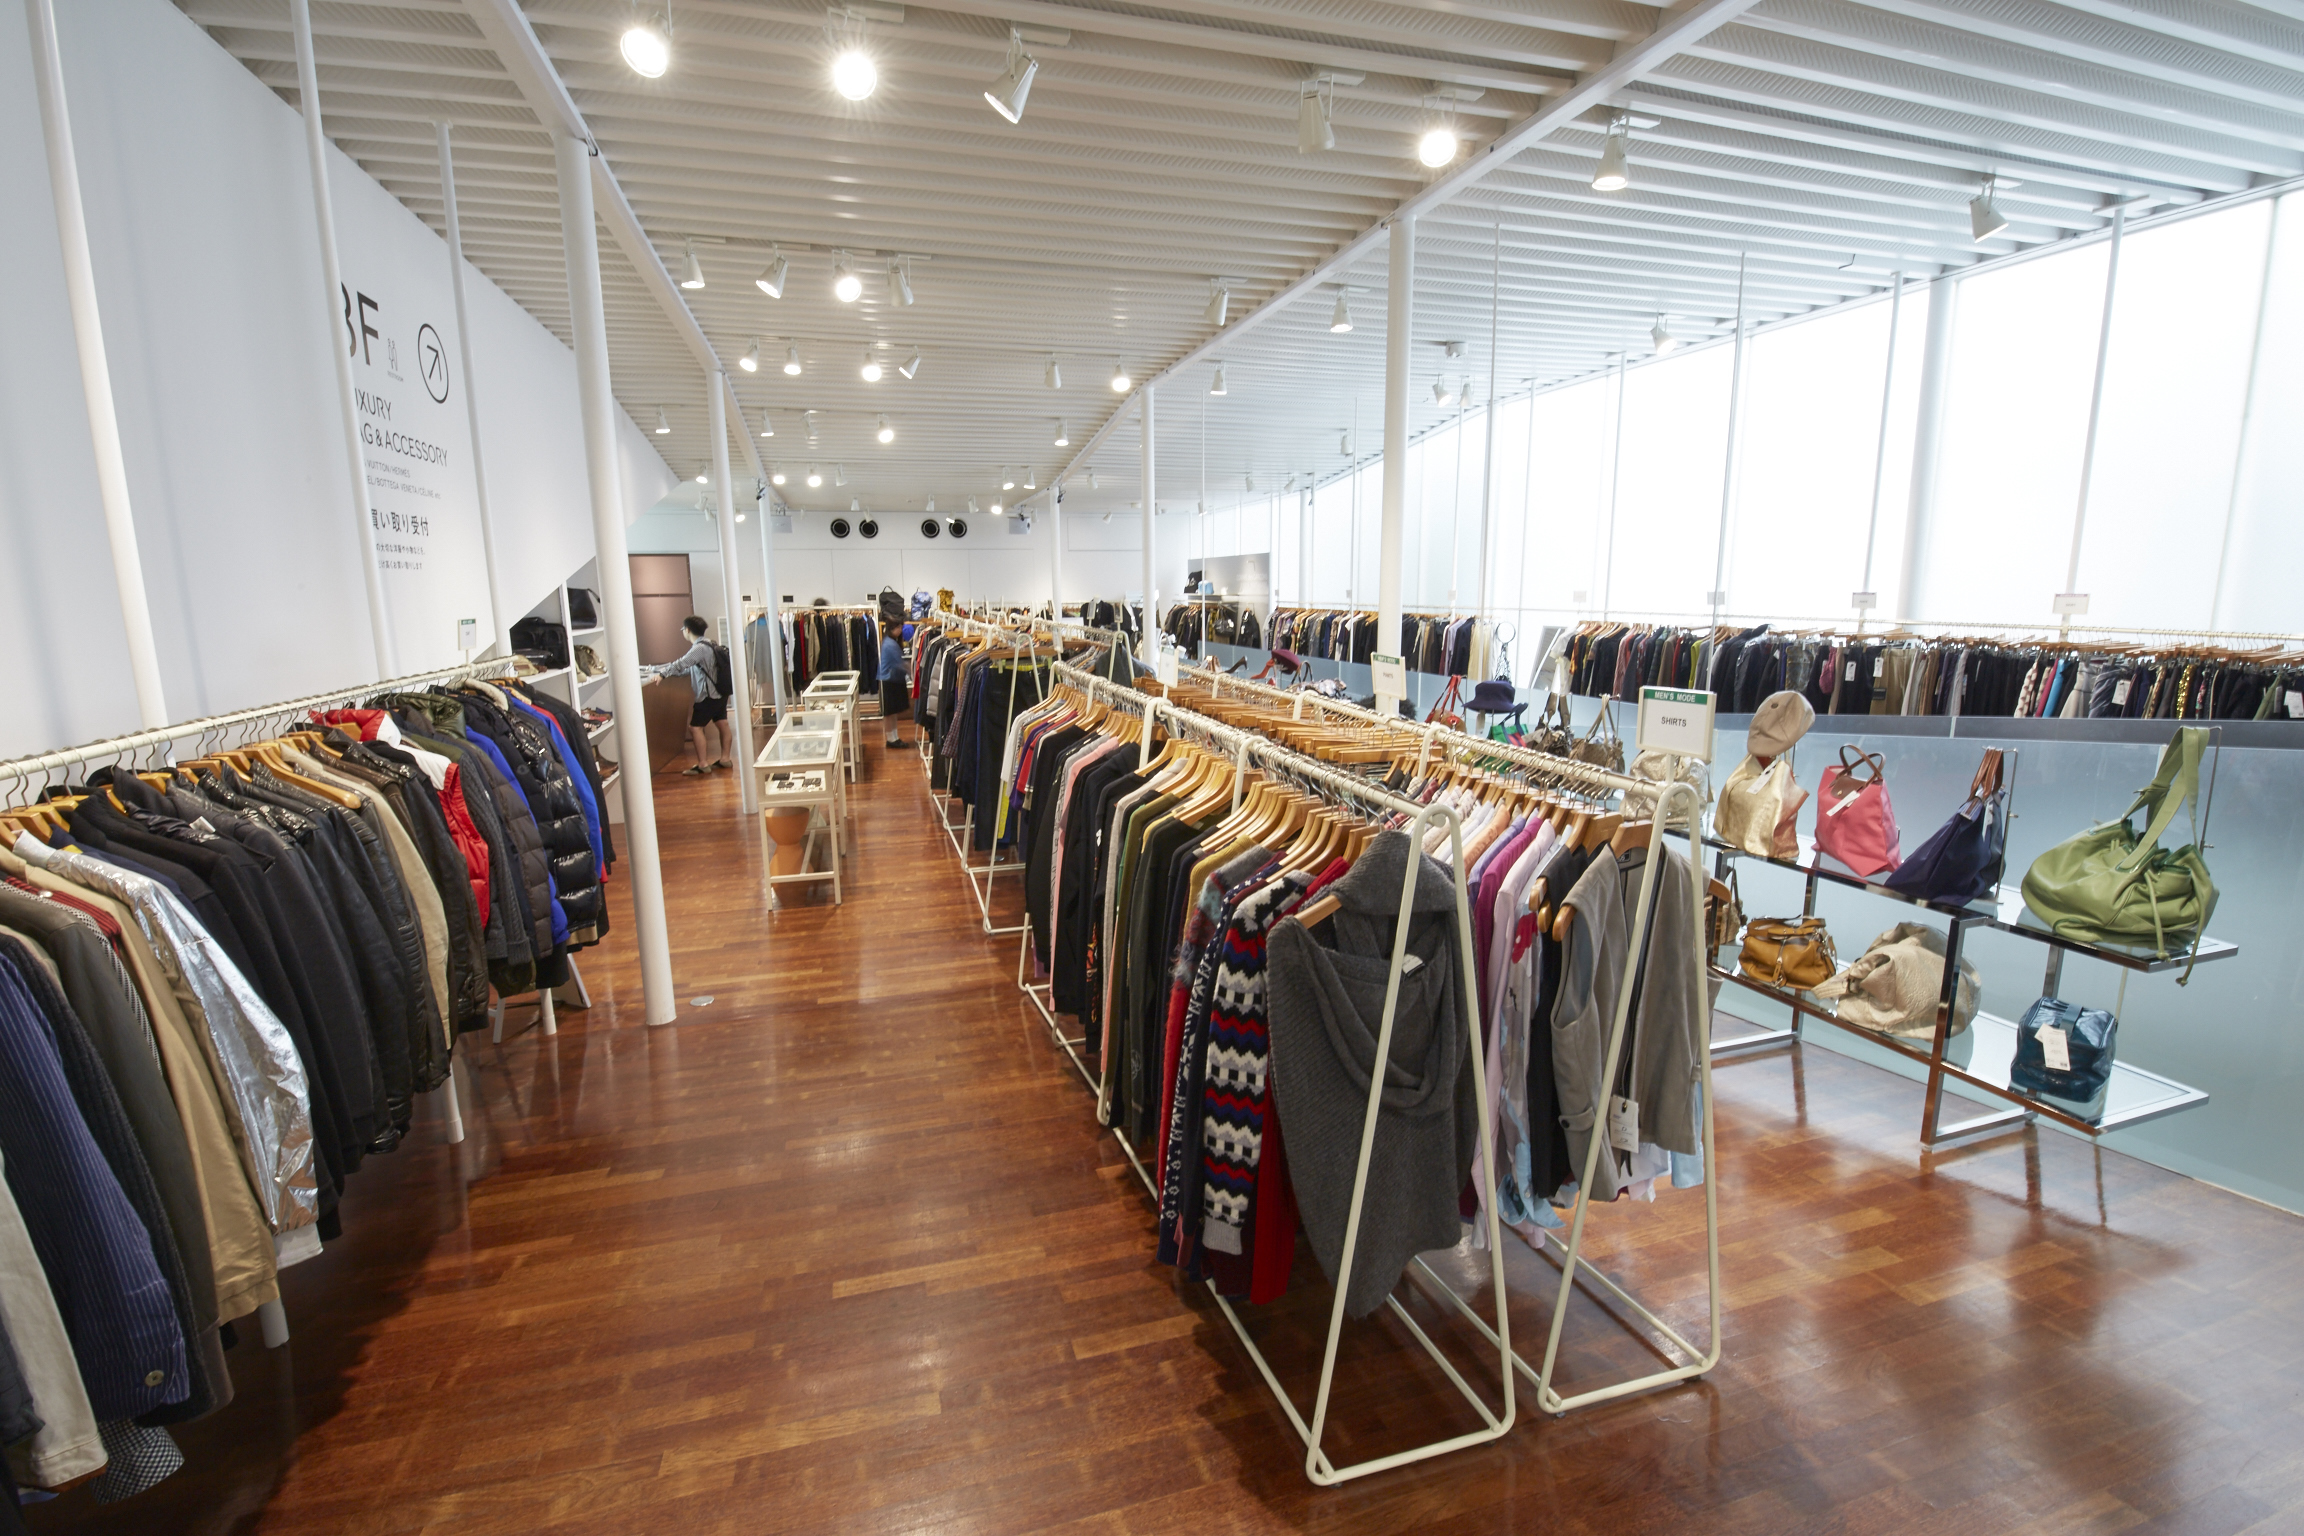 Supreme - Online shopping website for reused Japanese clothing brands